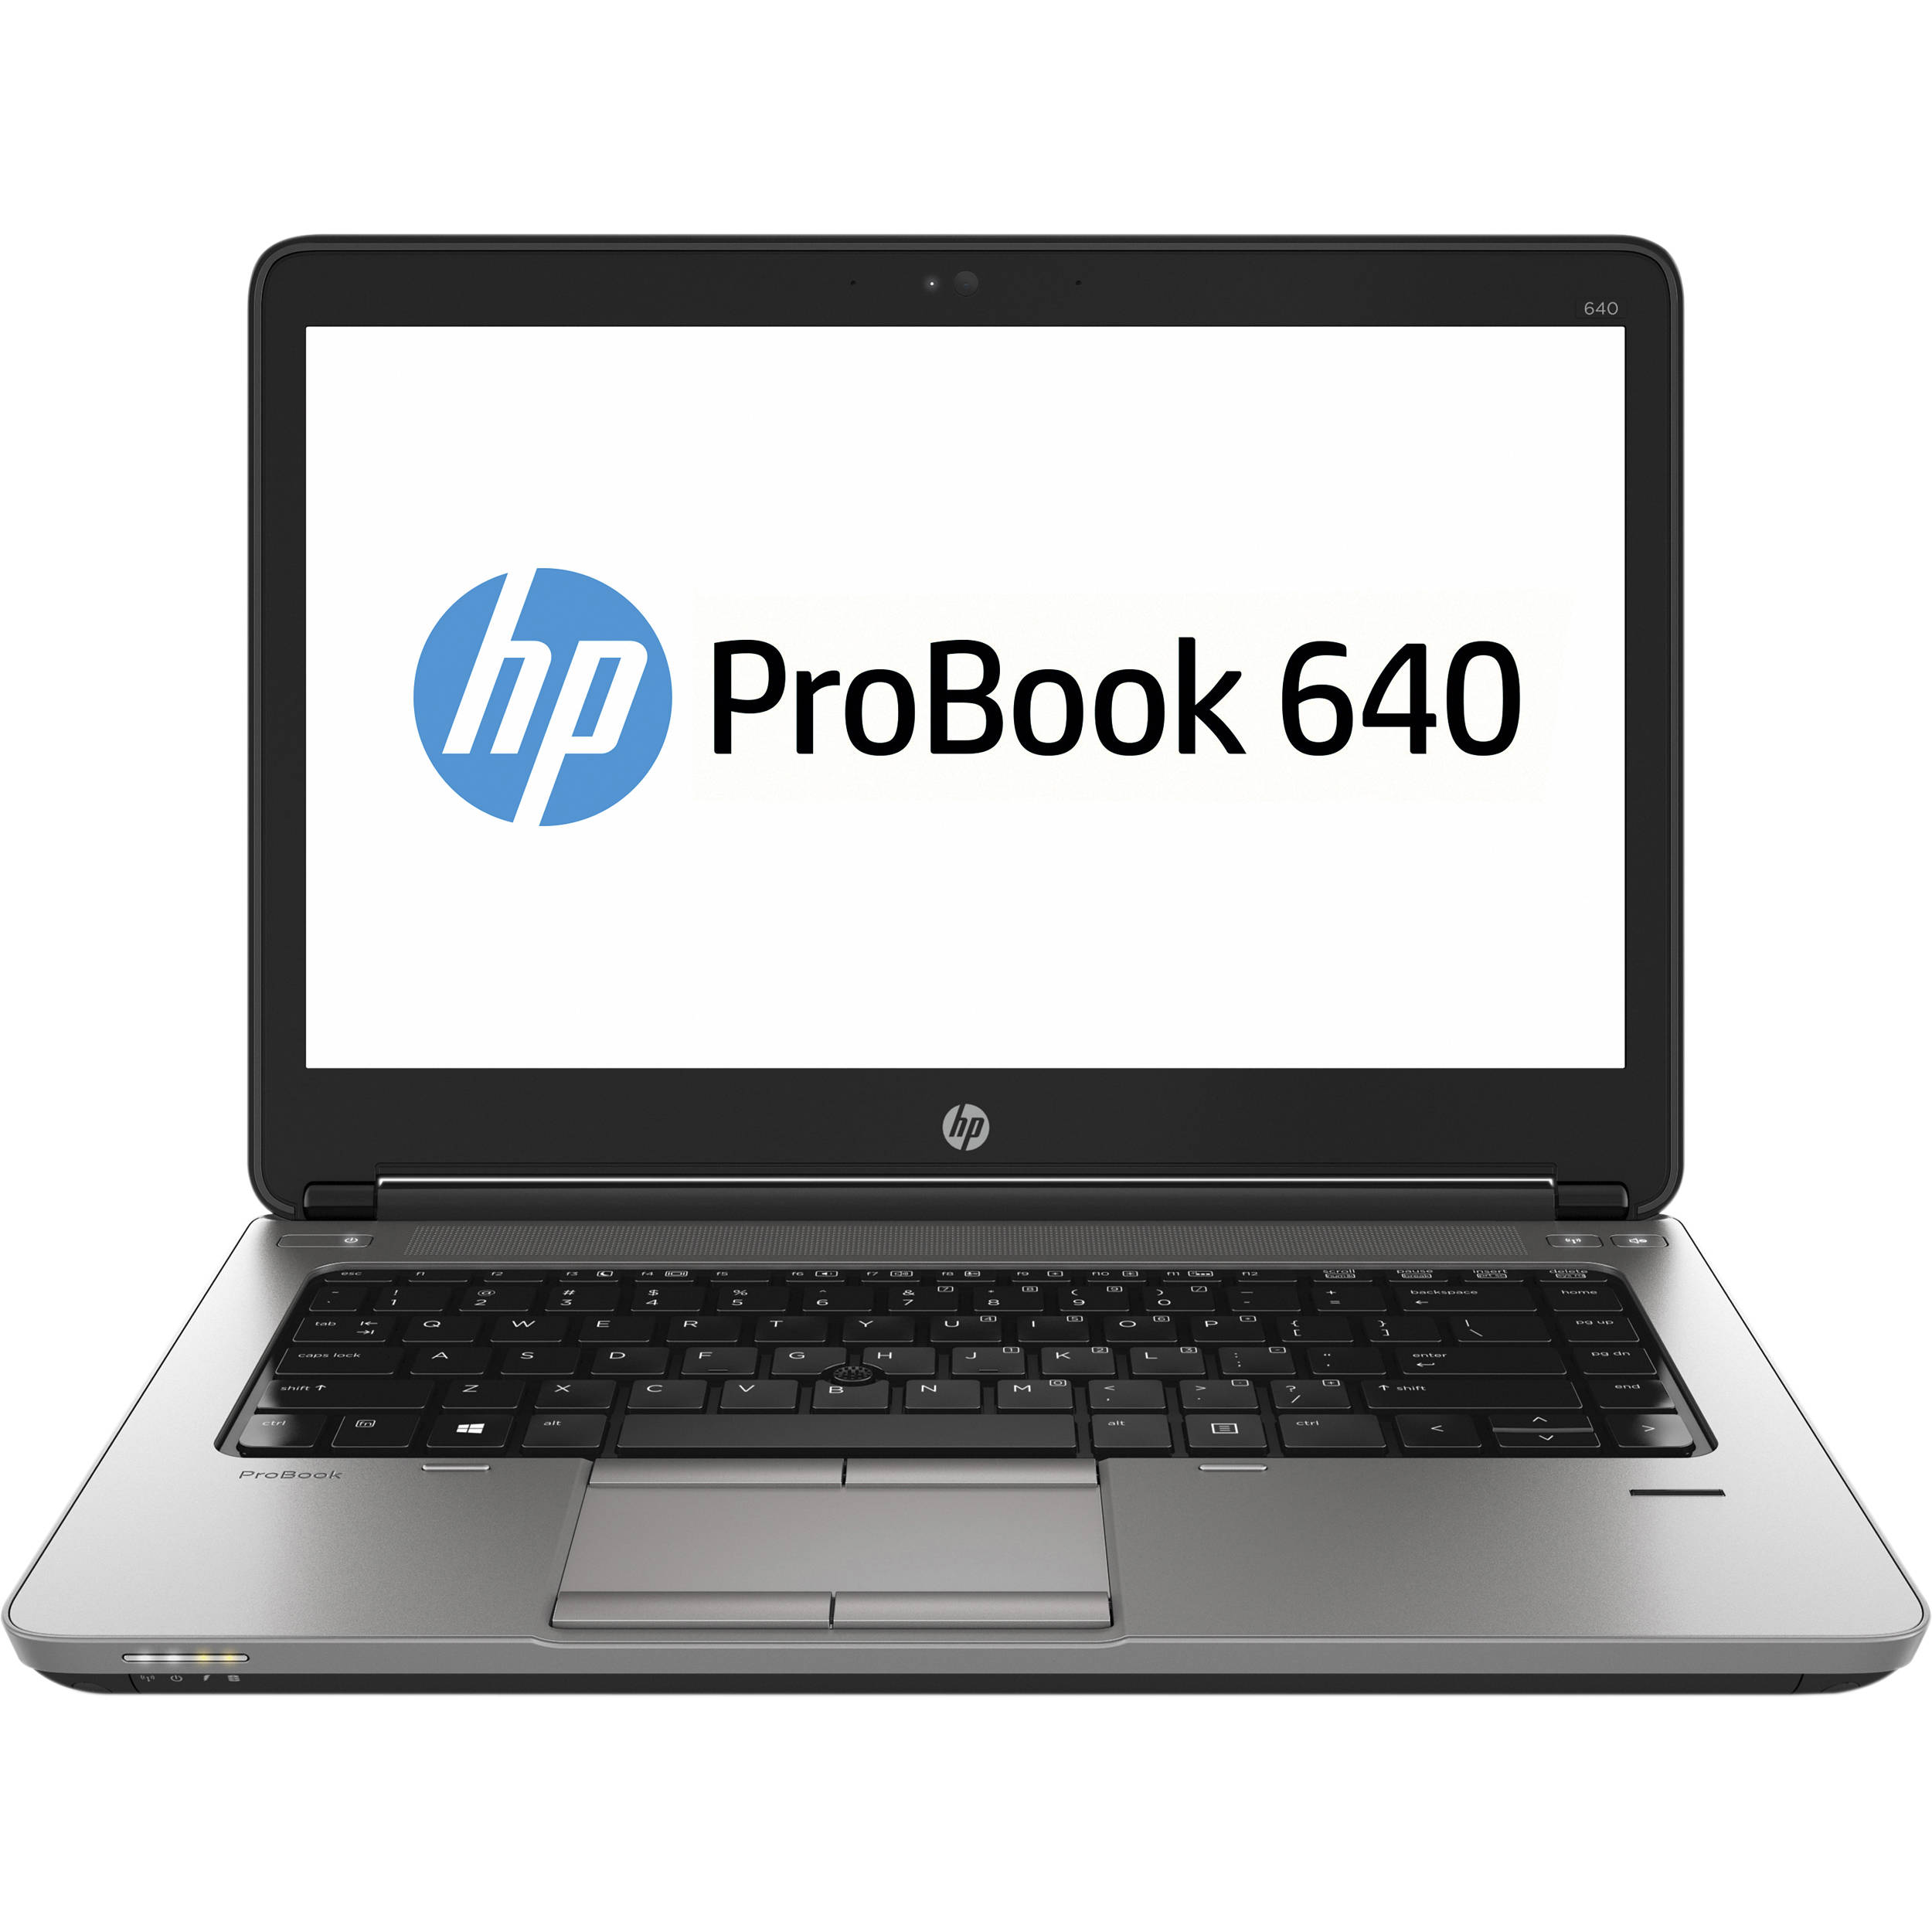 Refurbished (Fair) - HP ProBook 640 G1 Laptop: Intel Core i5-4200M 2.50GHz, 8GB RAM, 500 GB, 14?, Win 10 Home